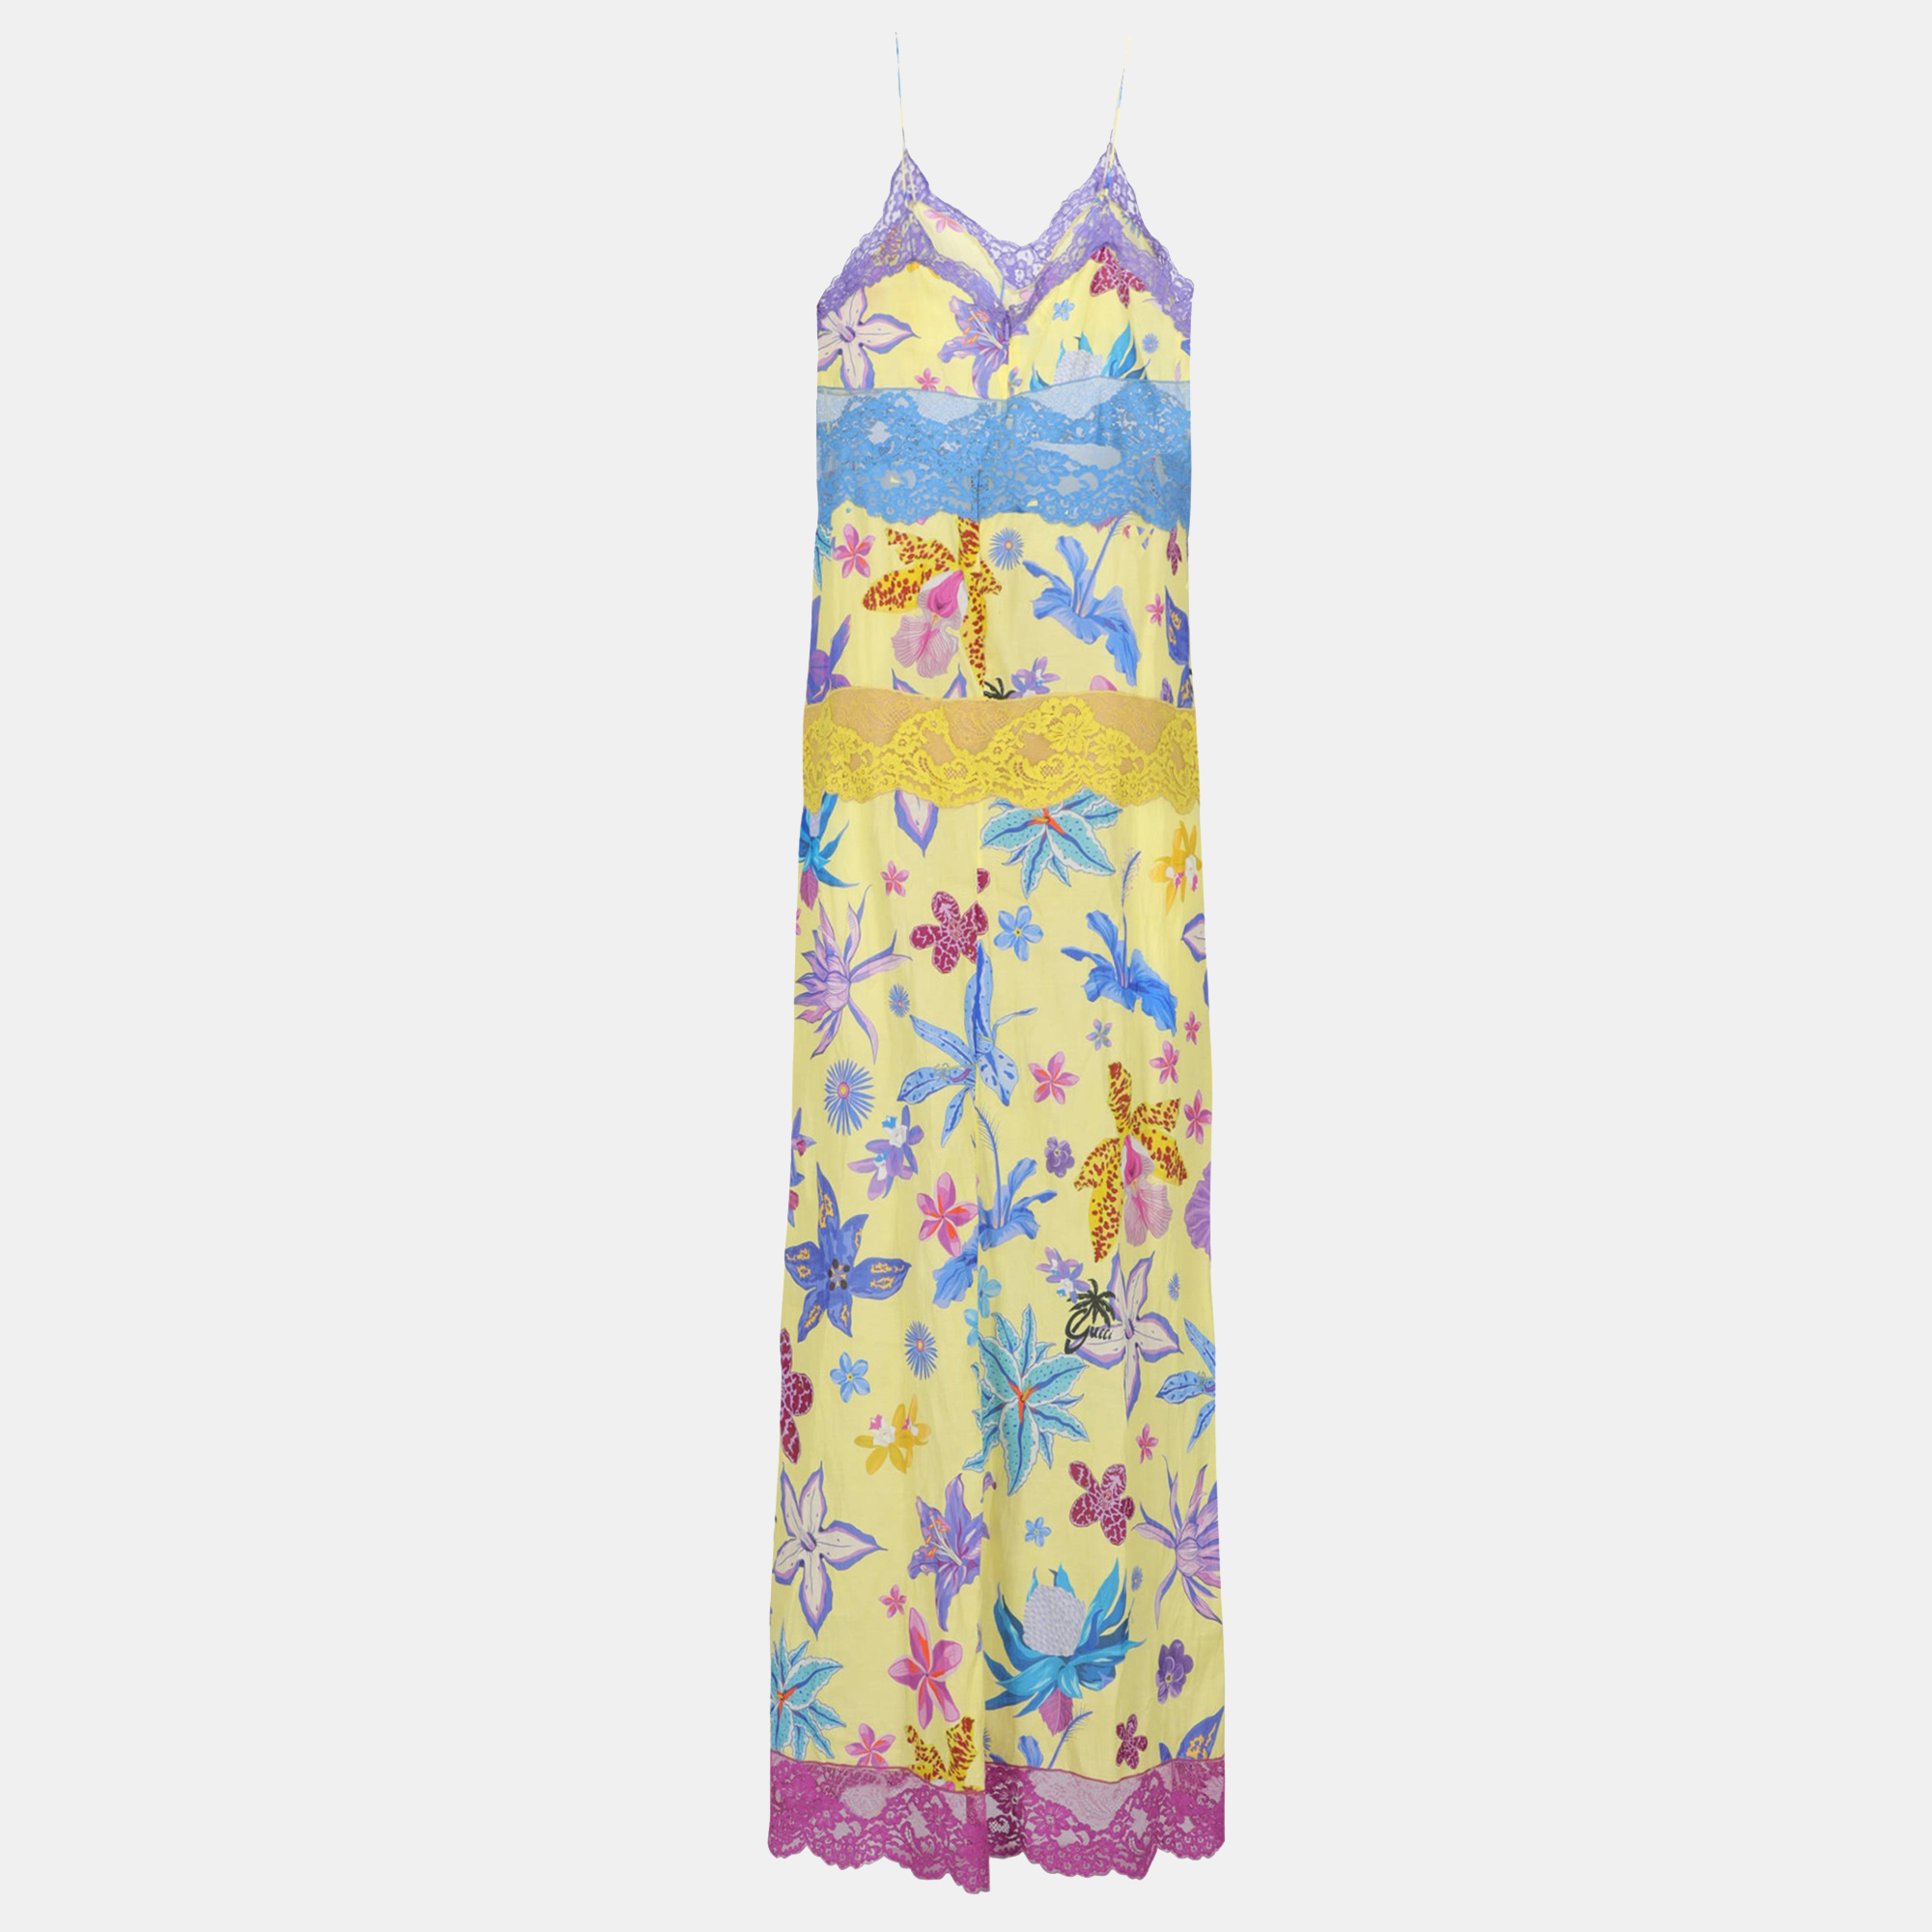 Gucci Women's Fabric Long Dress - Multicolor - S